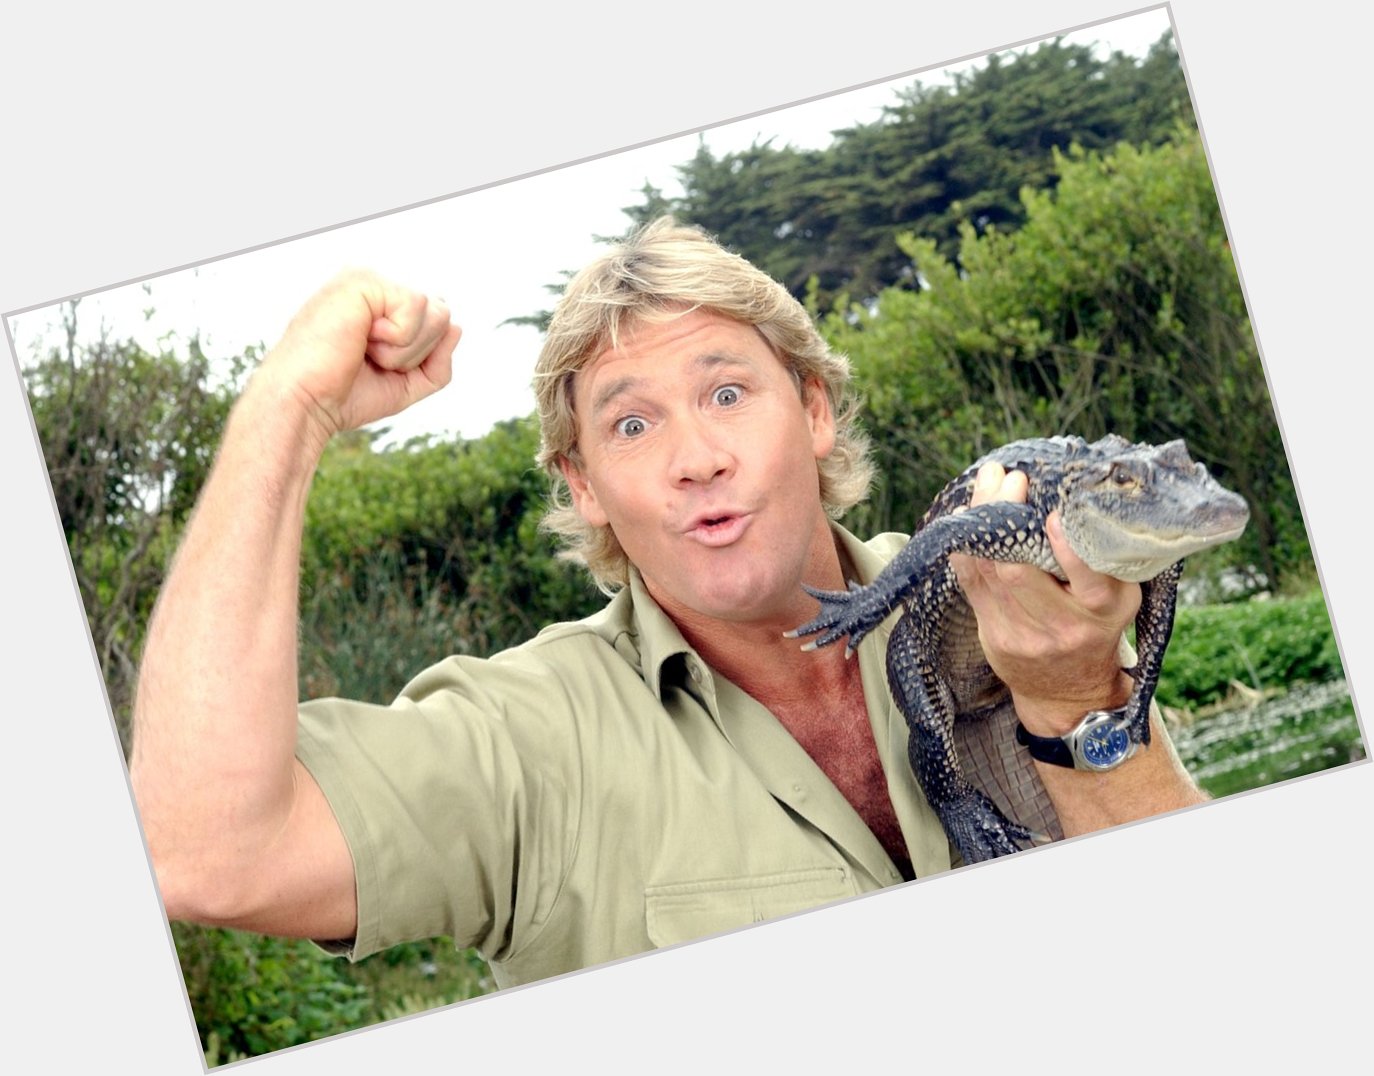 Happy Birthday to the original wildlife warrior: Steve Irwin 